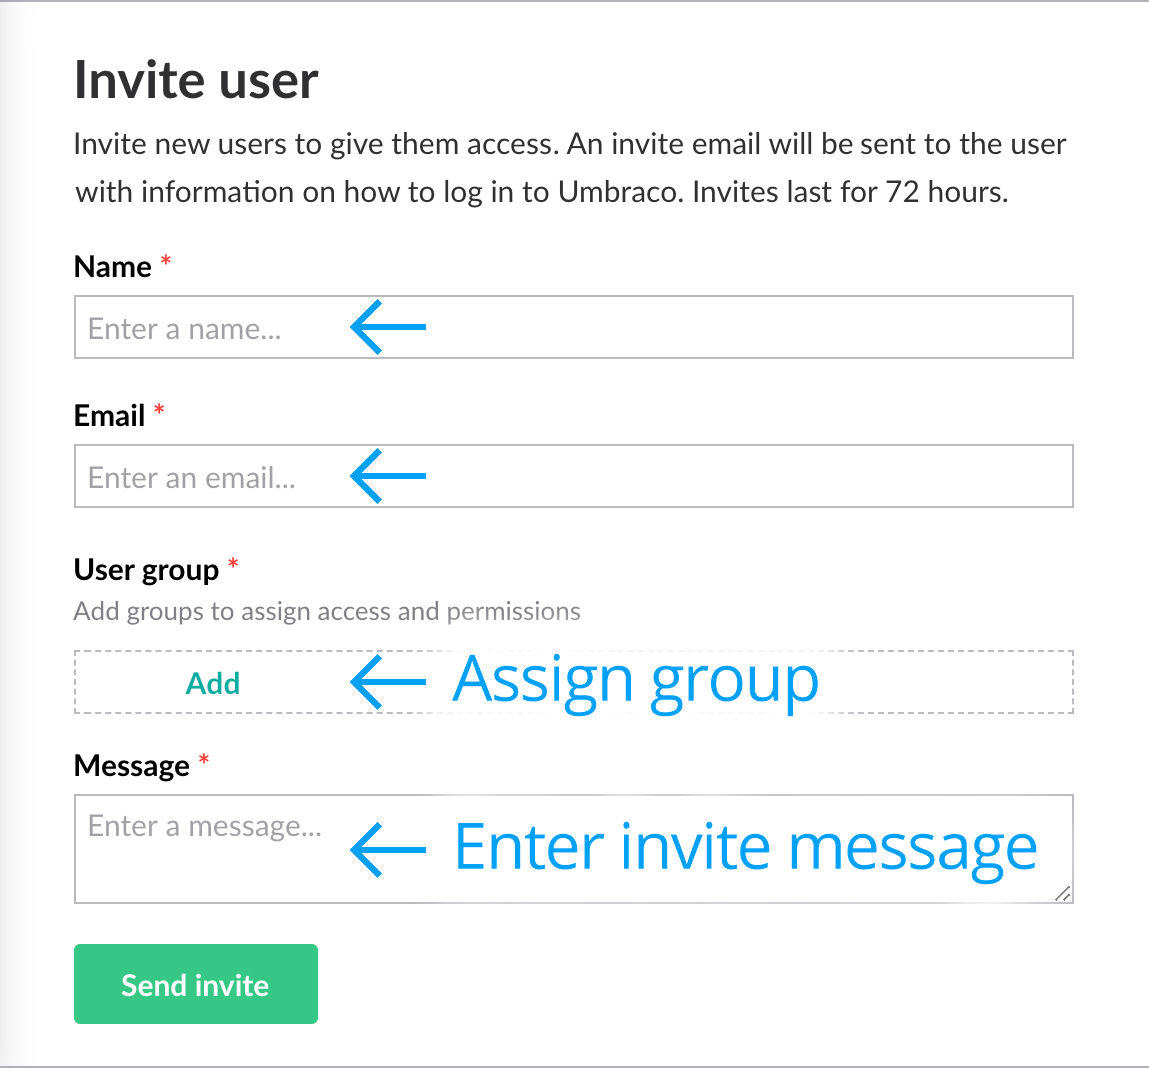 Invite user details entry screen